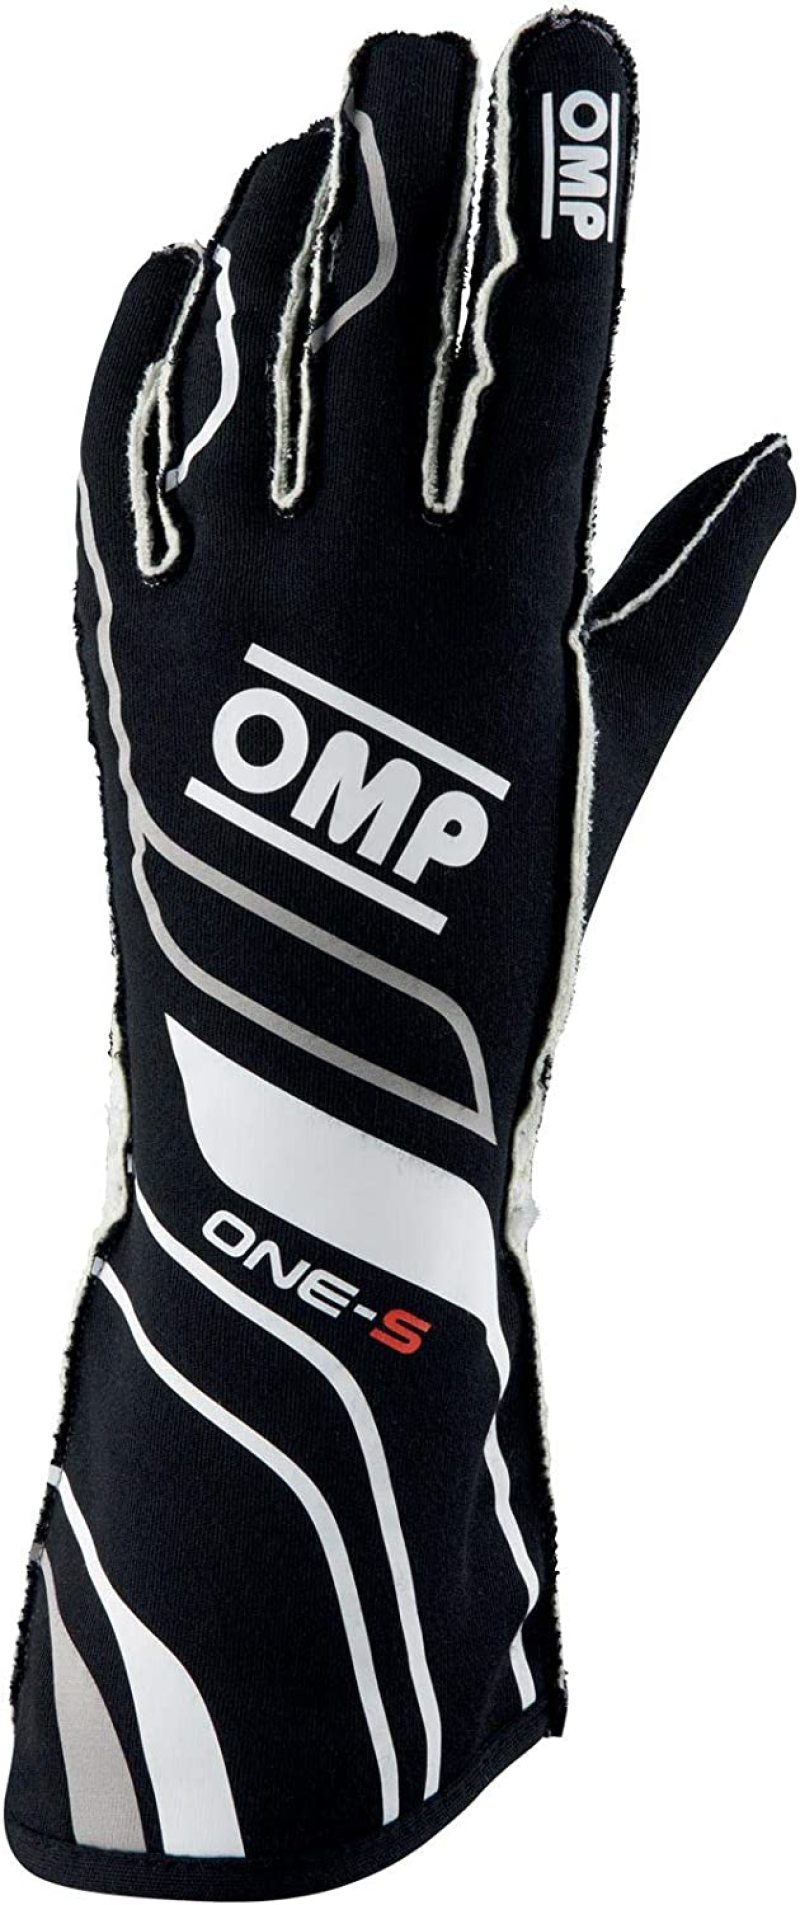 OMP One-S Gloves Black - Size S Fia 8556-2018 - IB0-0770-A01-071-S